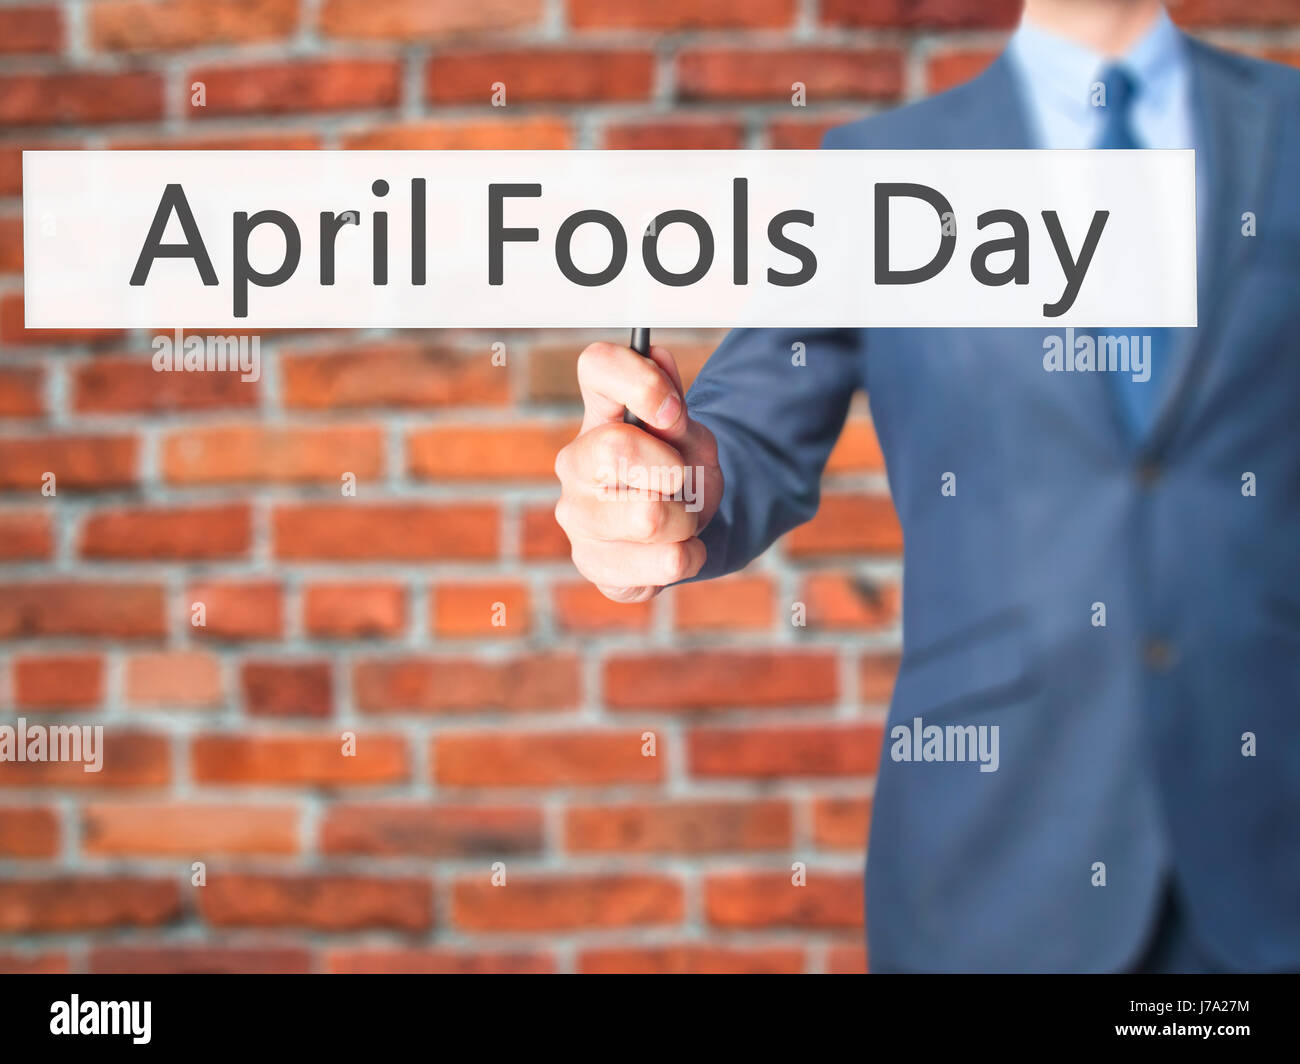 April Fools Day - hombre de negocios mostrando signo. Negocios, tecnología, internet concepto. Stock Photo Foto de stock